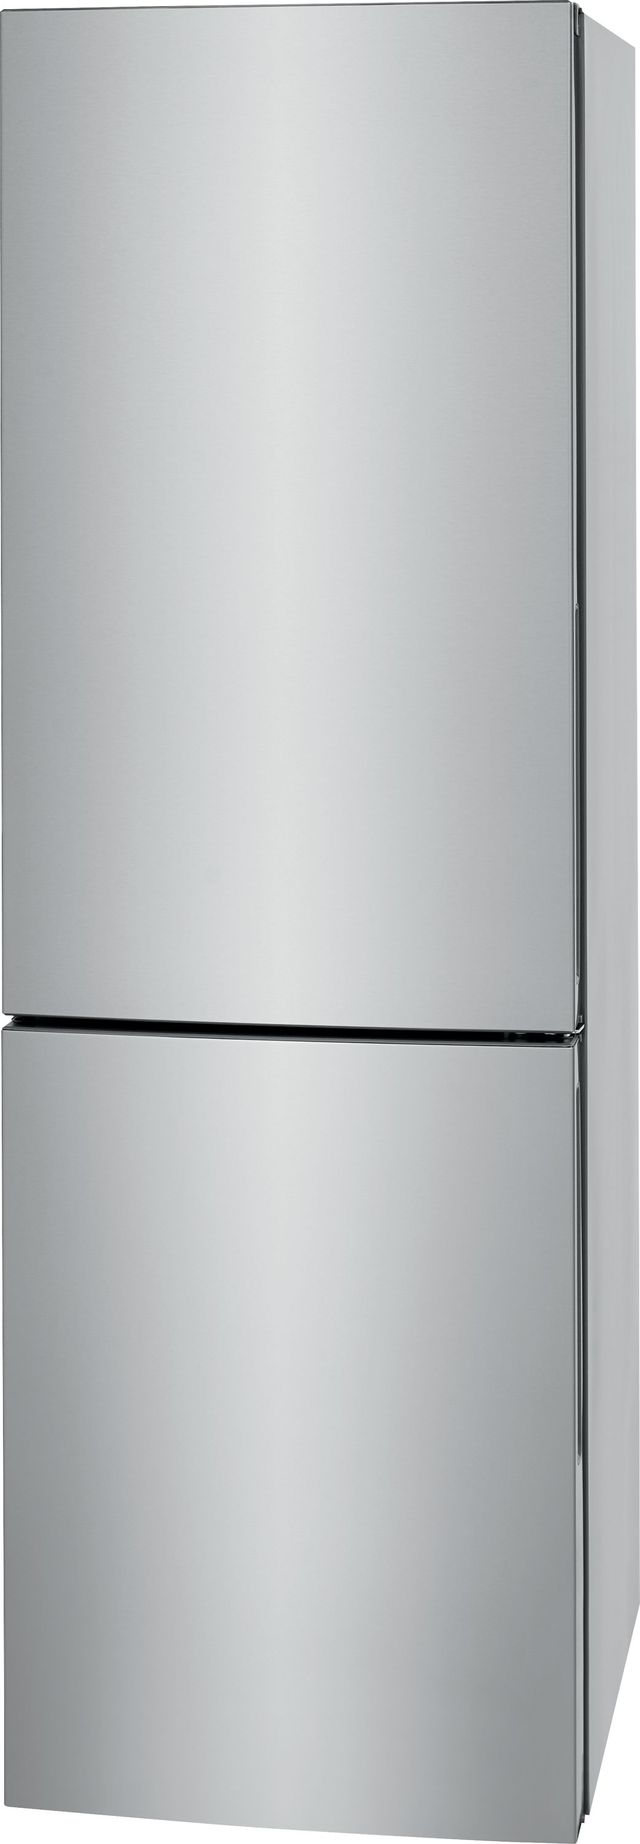 Electrolux 11.8 Cu. Ft. Stainless Steel Bottom Freezer Refrigerator 3